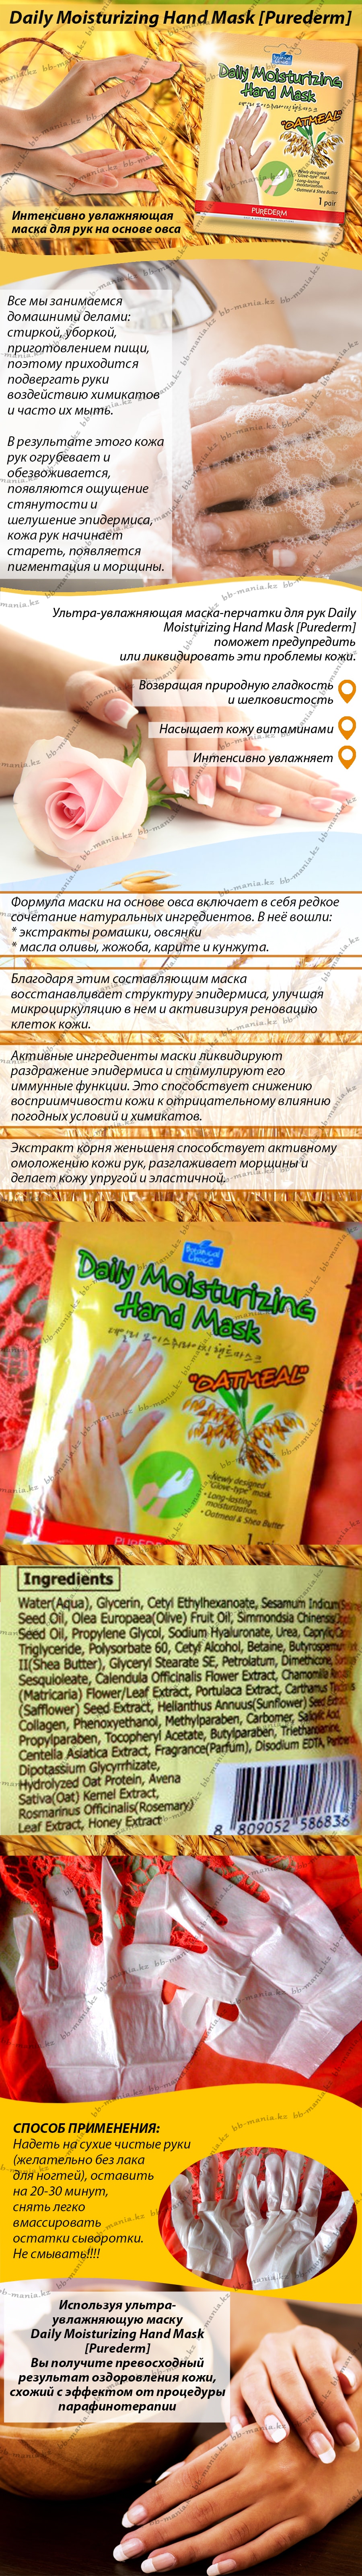 Daily-Moisturizing-Hand-Mask-[Purederm]bbmania-min